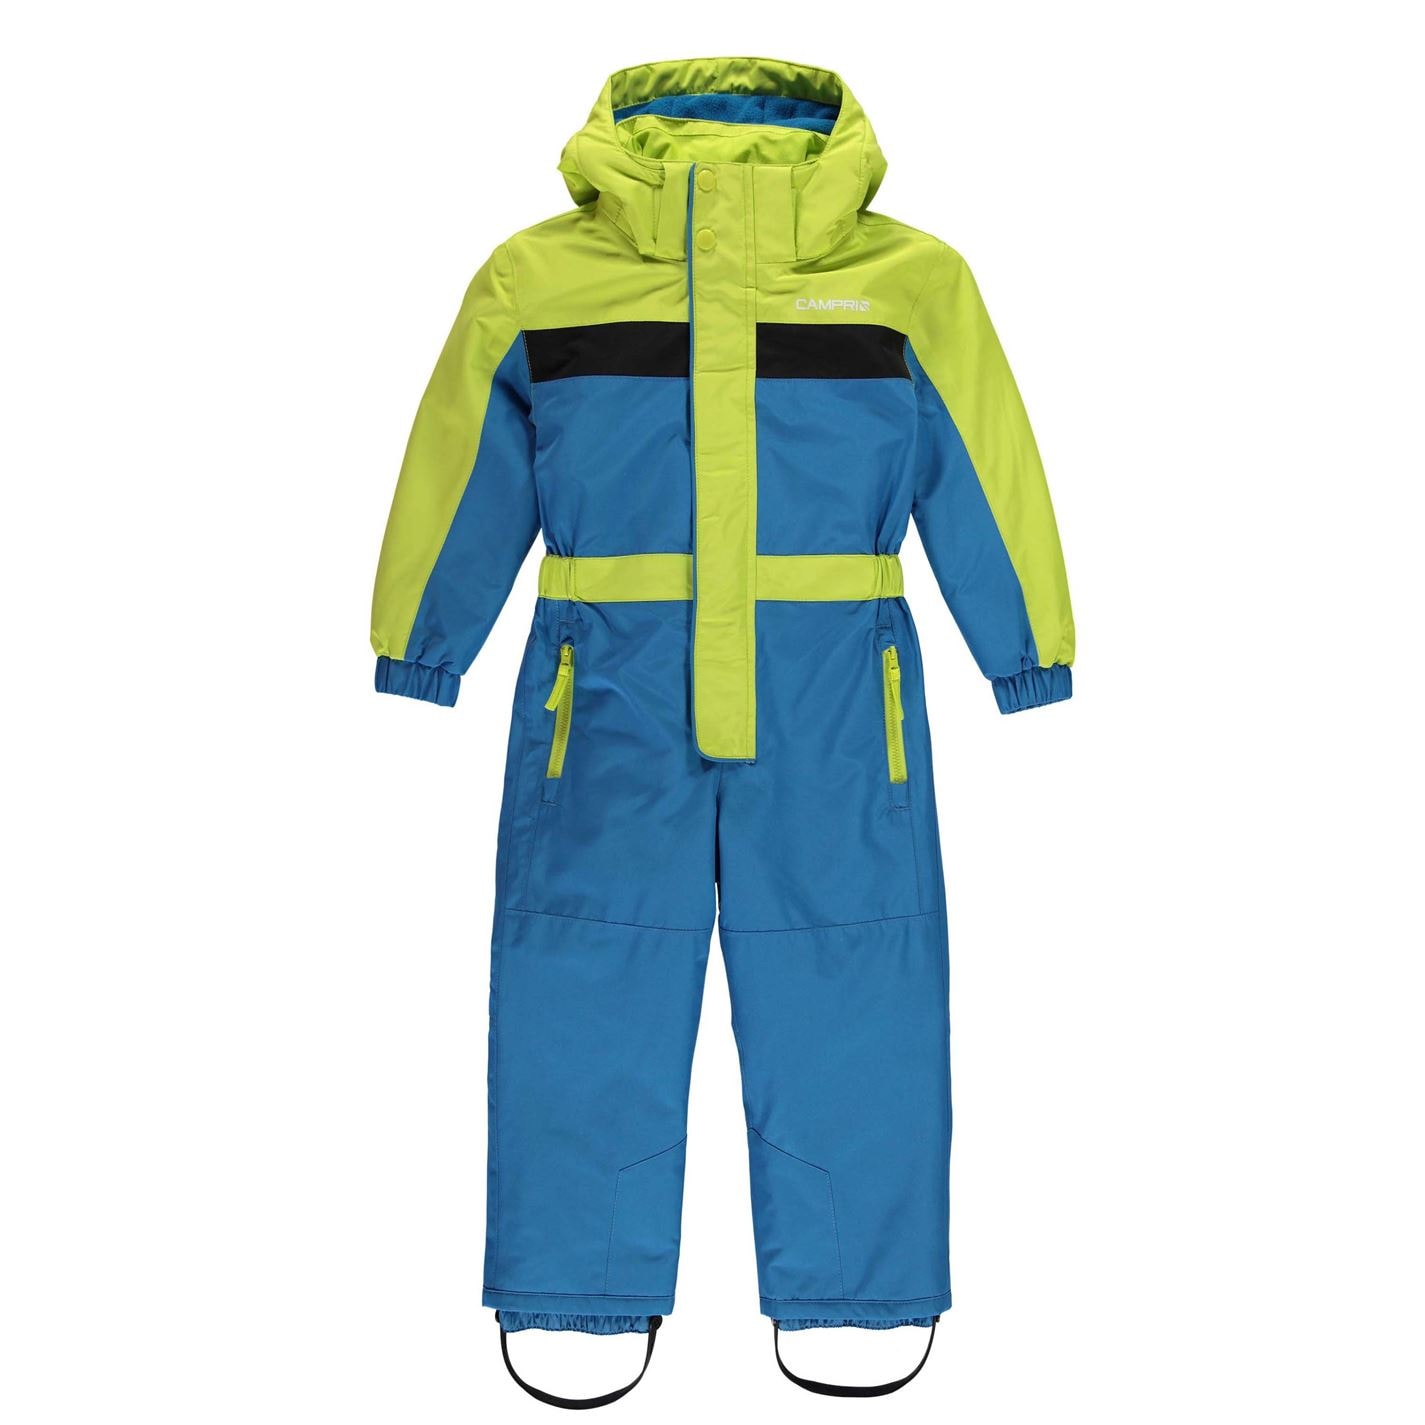 Children's ski suit Campri Infants